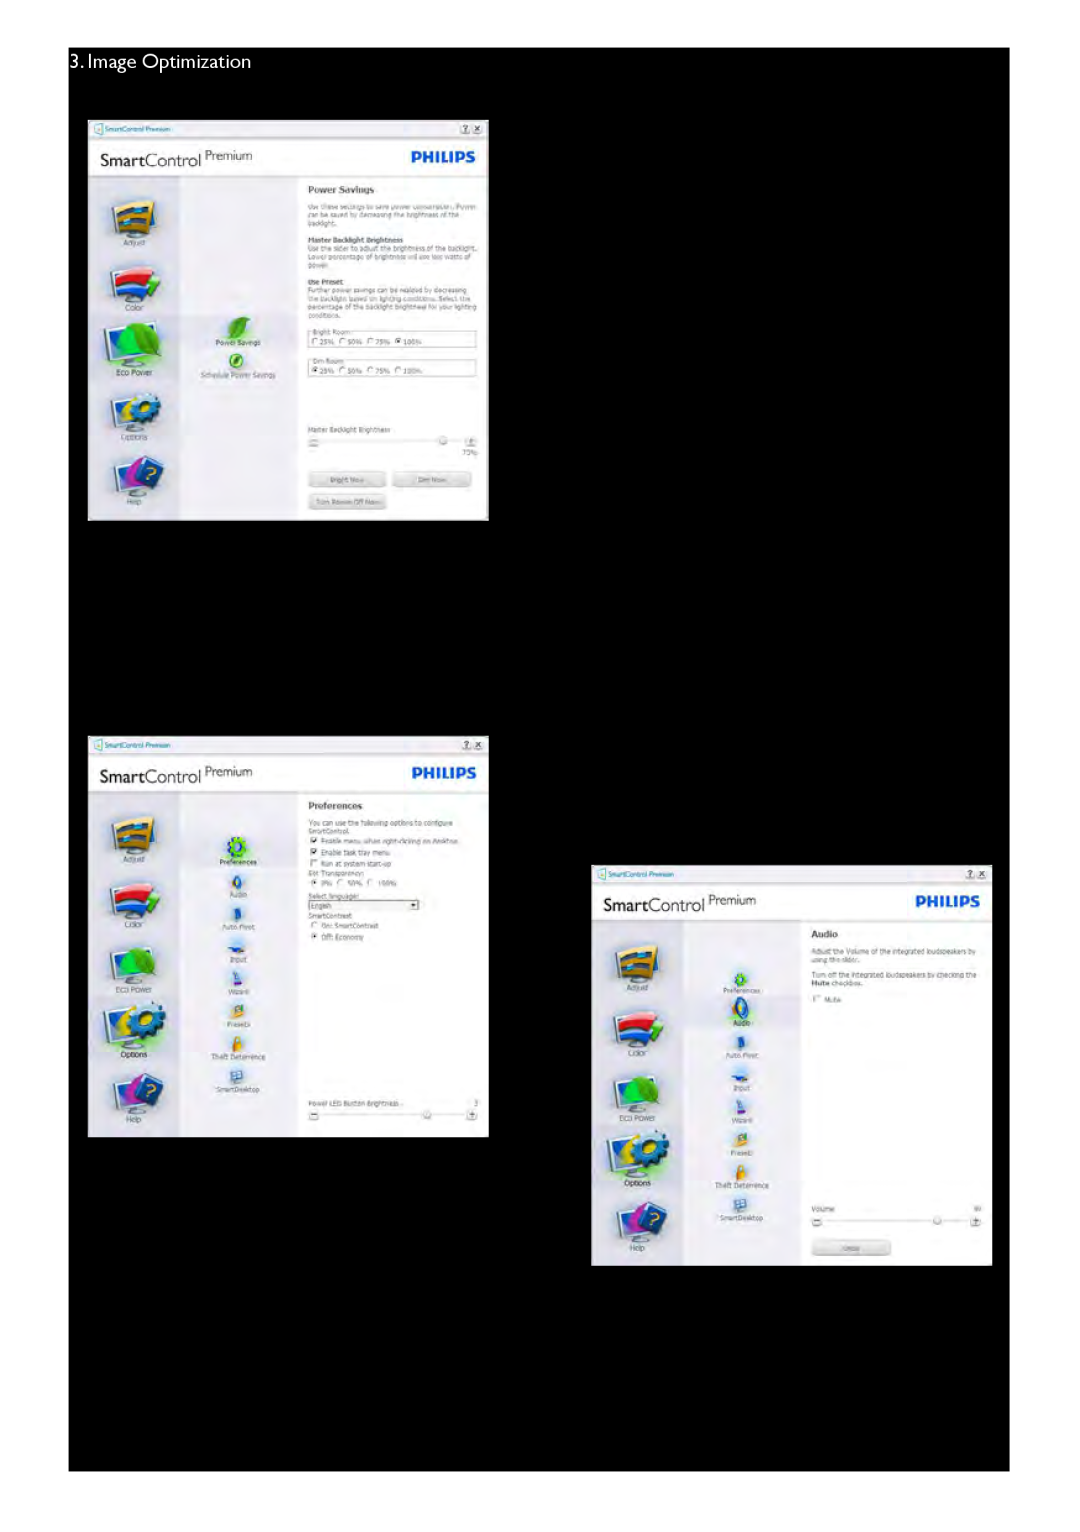 Philips 249C4Q user manual Eco Power menu Options menu, •Displays current preference settings, Image Optimization 